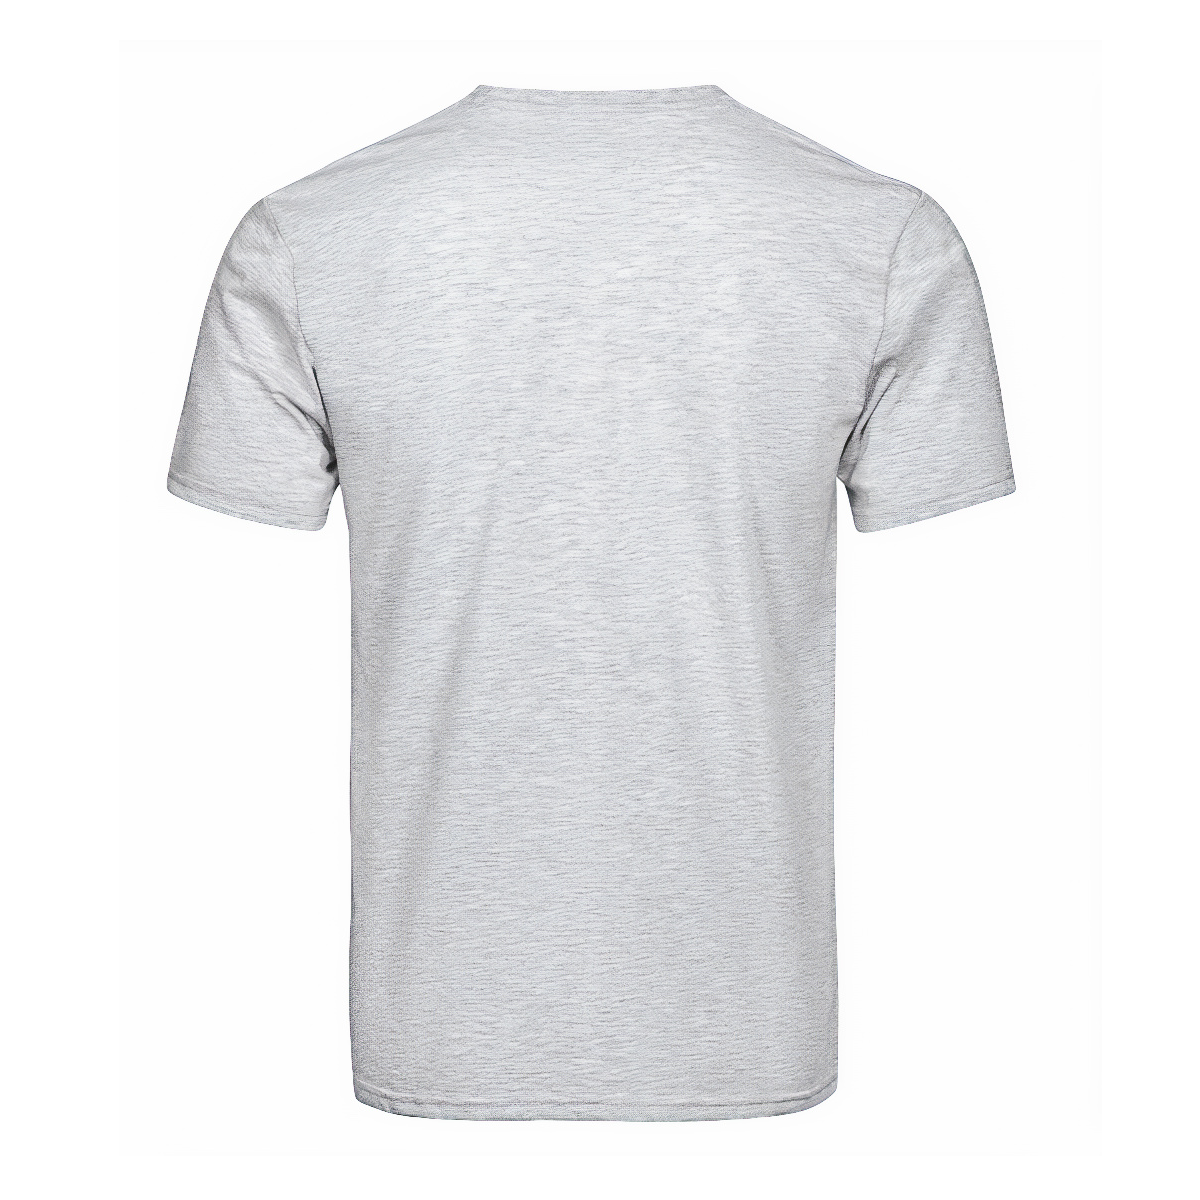 Wemyss Tartan Crest T-shirt - I'm not yelling style